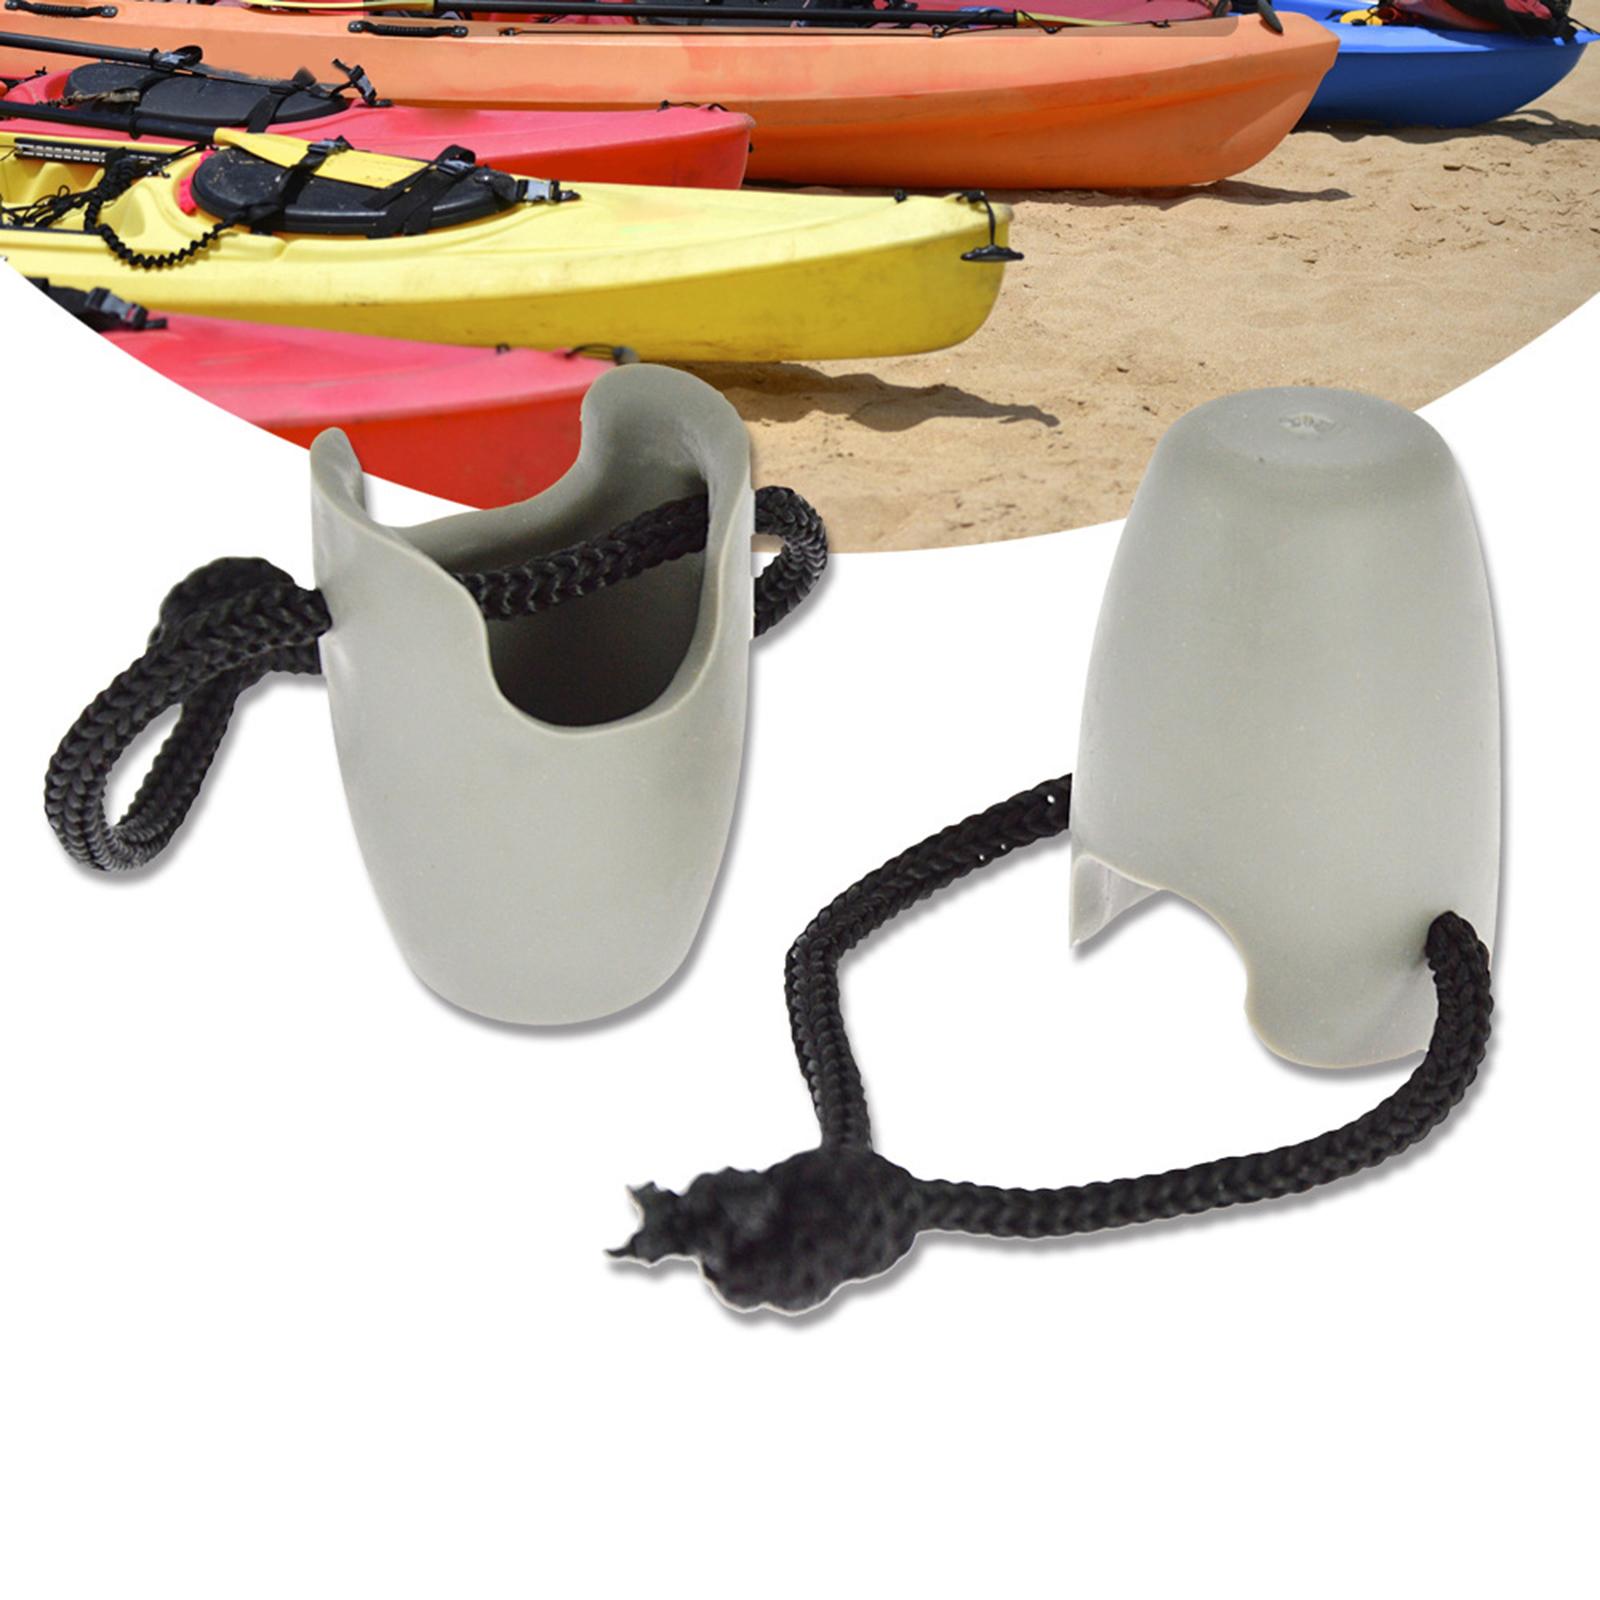 2pcs Kayak Scupper Plug Kit Universal Rubber U Shaped Canoe Drain Holes Stopper Bung Replacement Part for Kayak Canoe